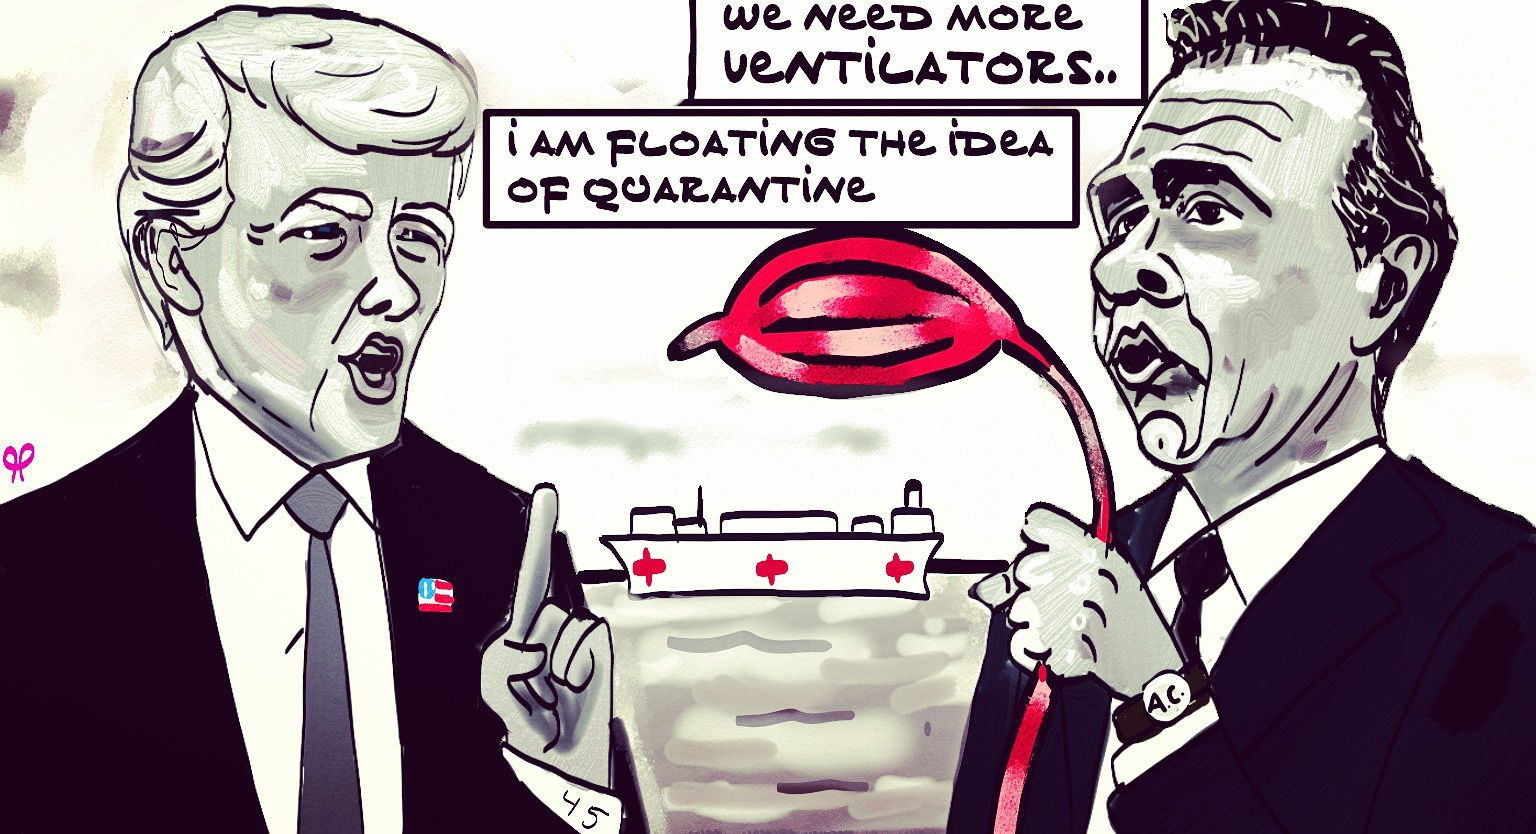 President Donald Trump Andrew Cuomo coronavirus political cartoons post thumbnail image